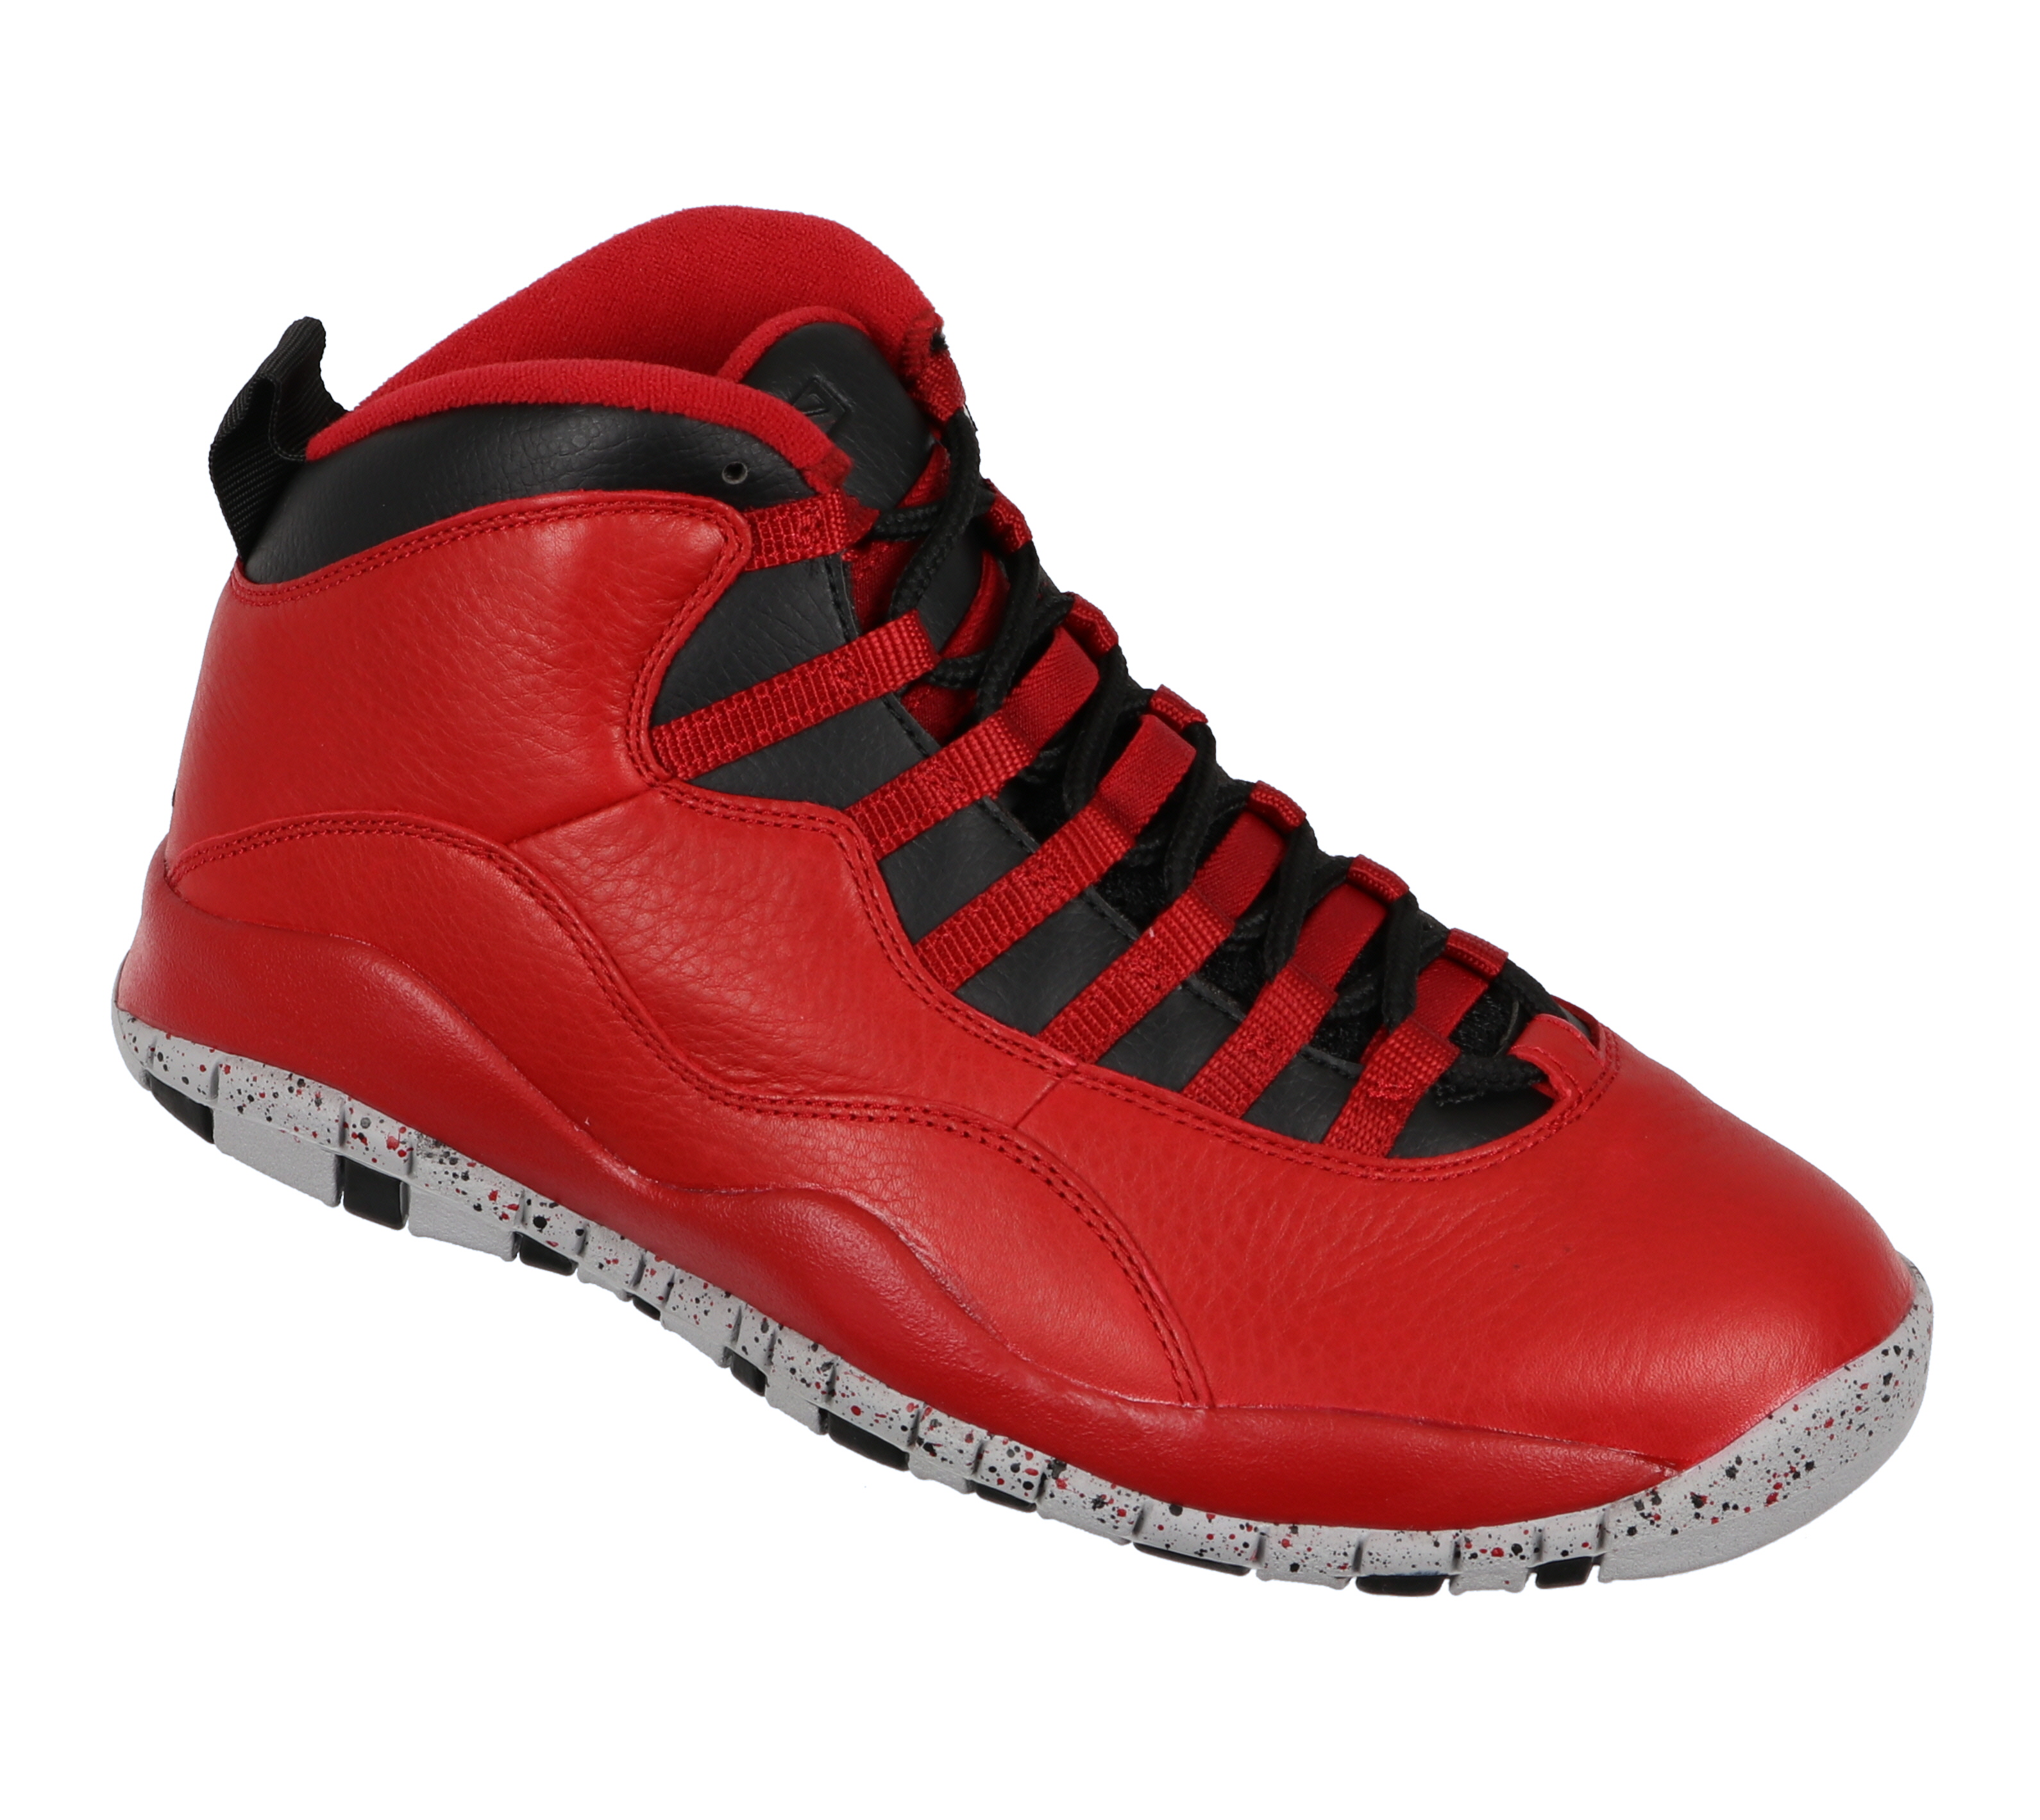 Jordan Men's Retro 10 30th Basketball Shoes sz 9.5 Red Black Bulls Over Broadway Edition - image 1 of 7